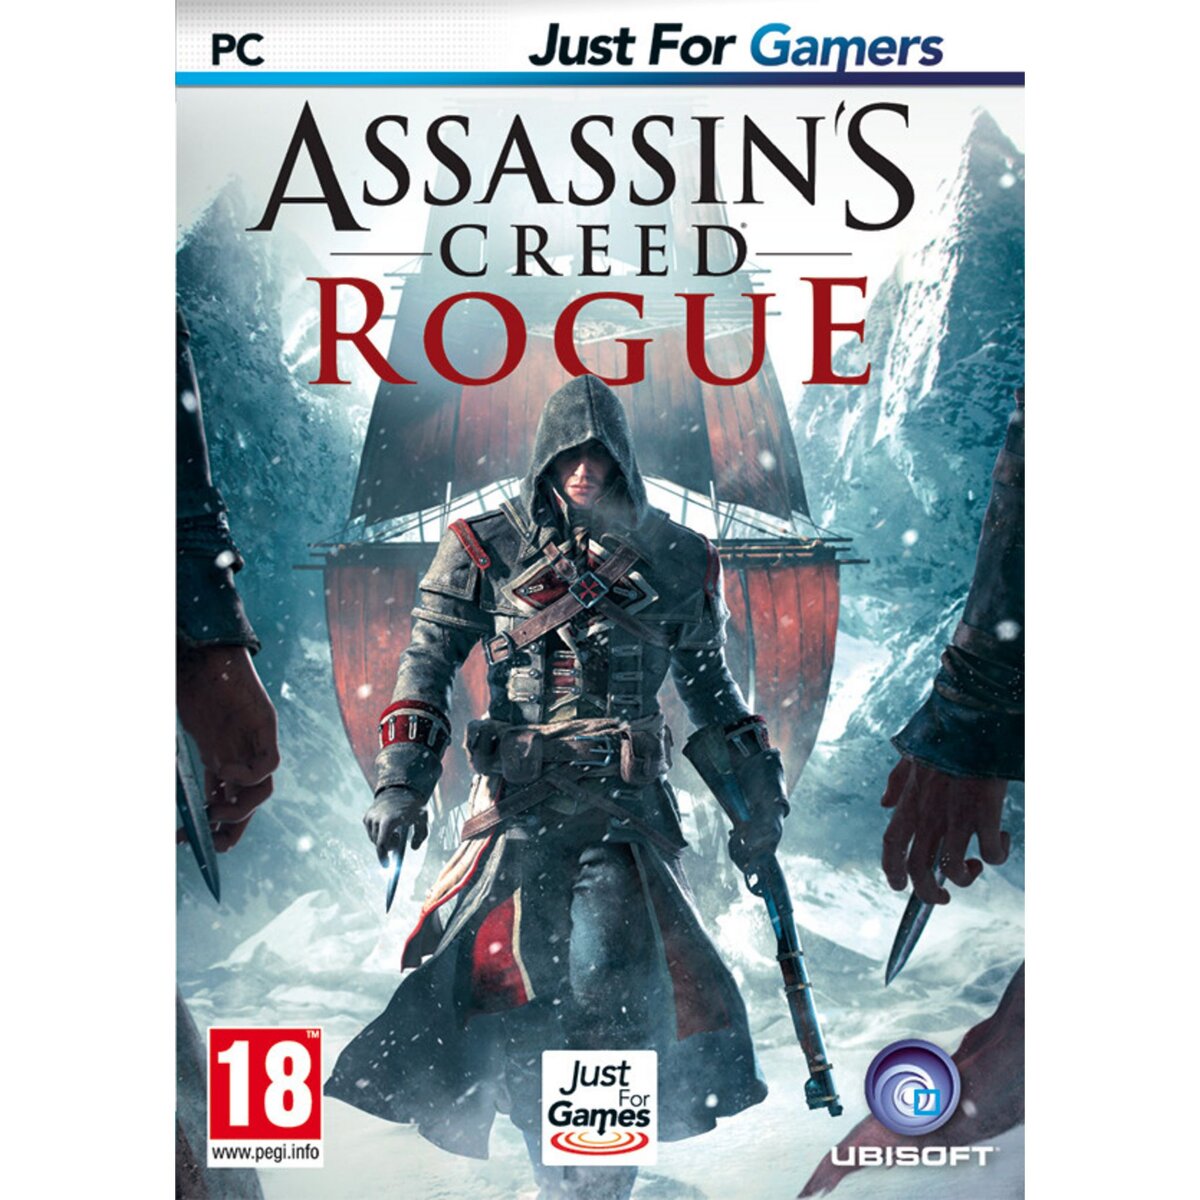 Assassins creed Rogue PC